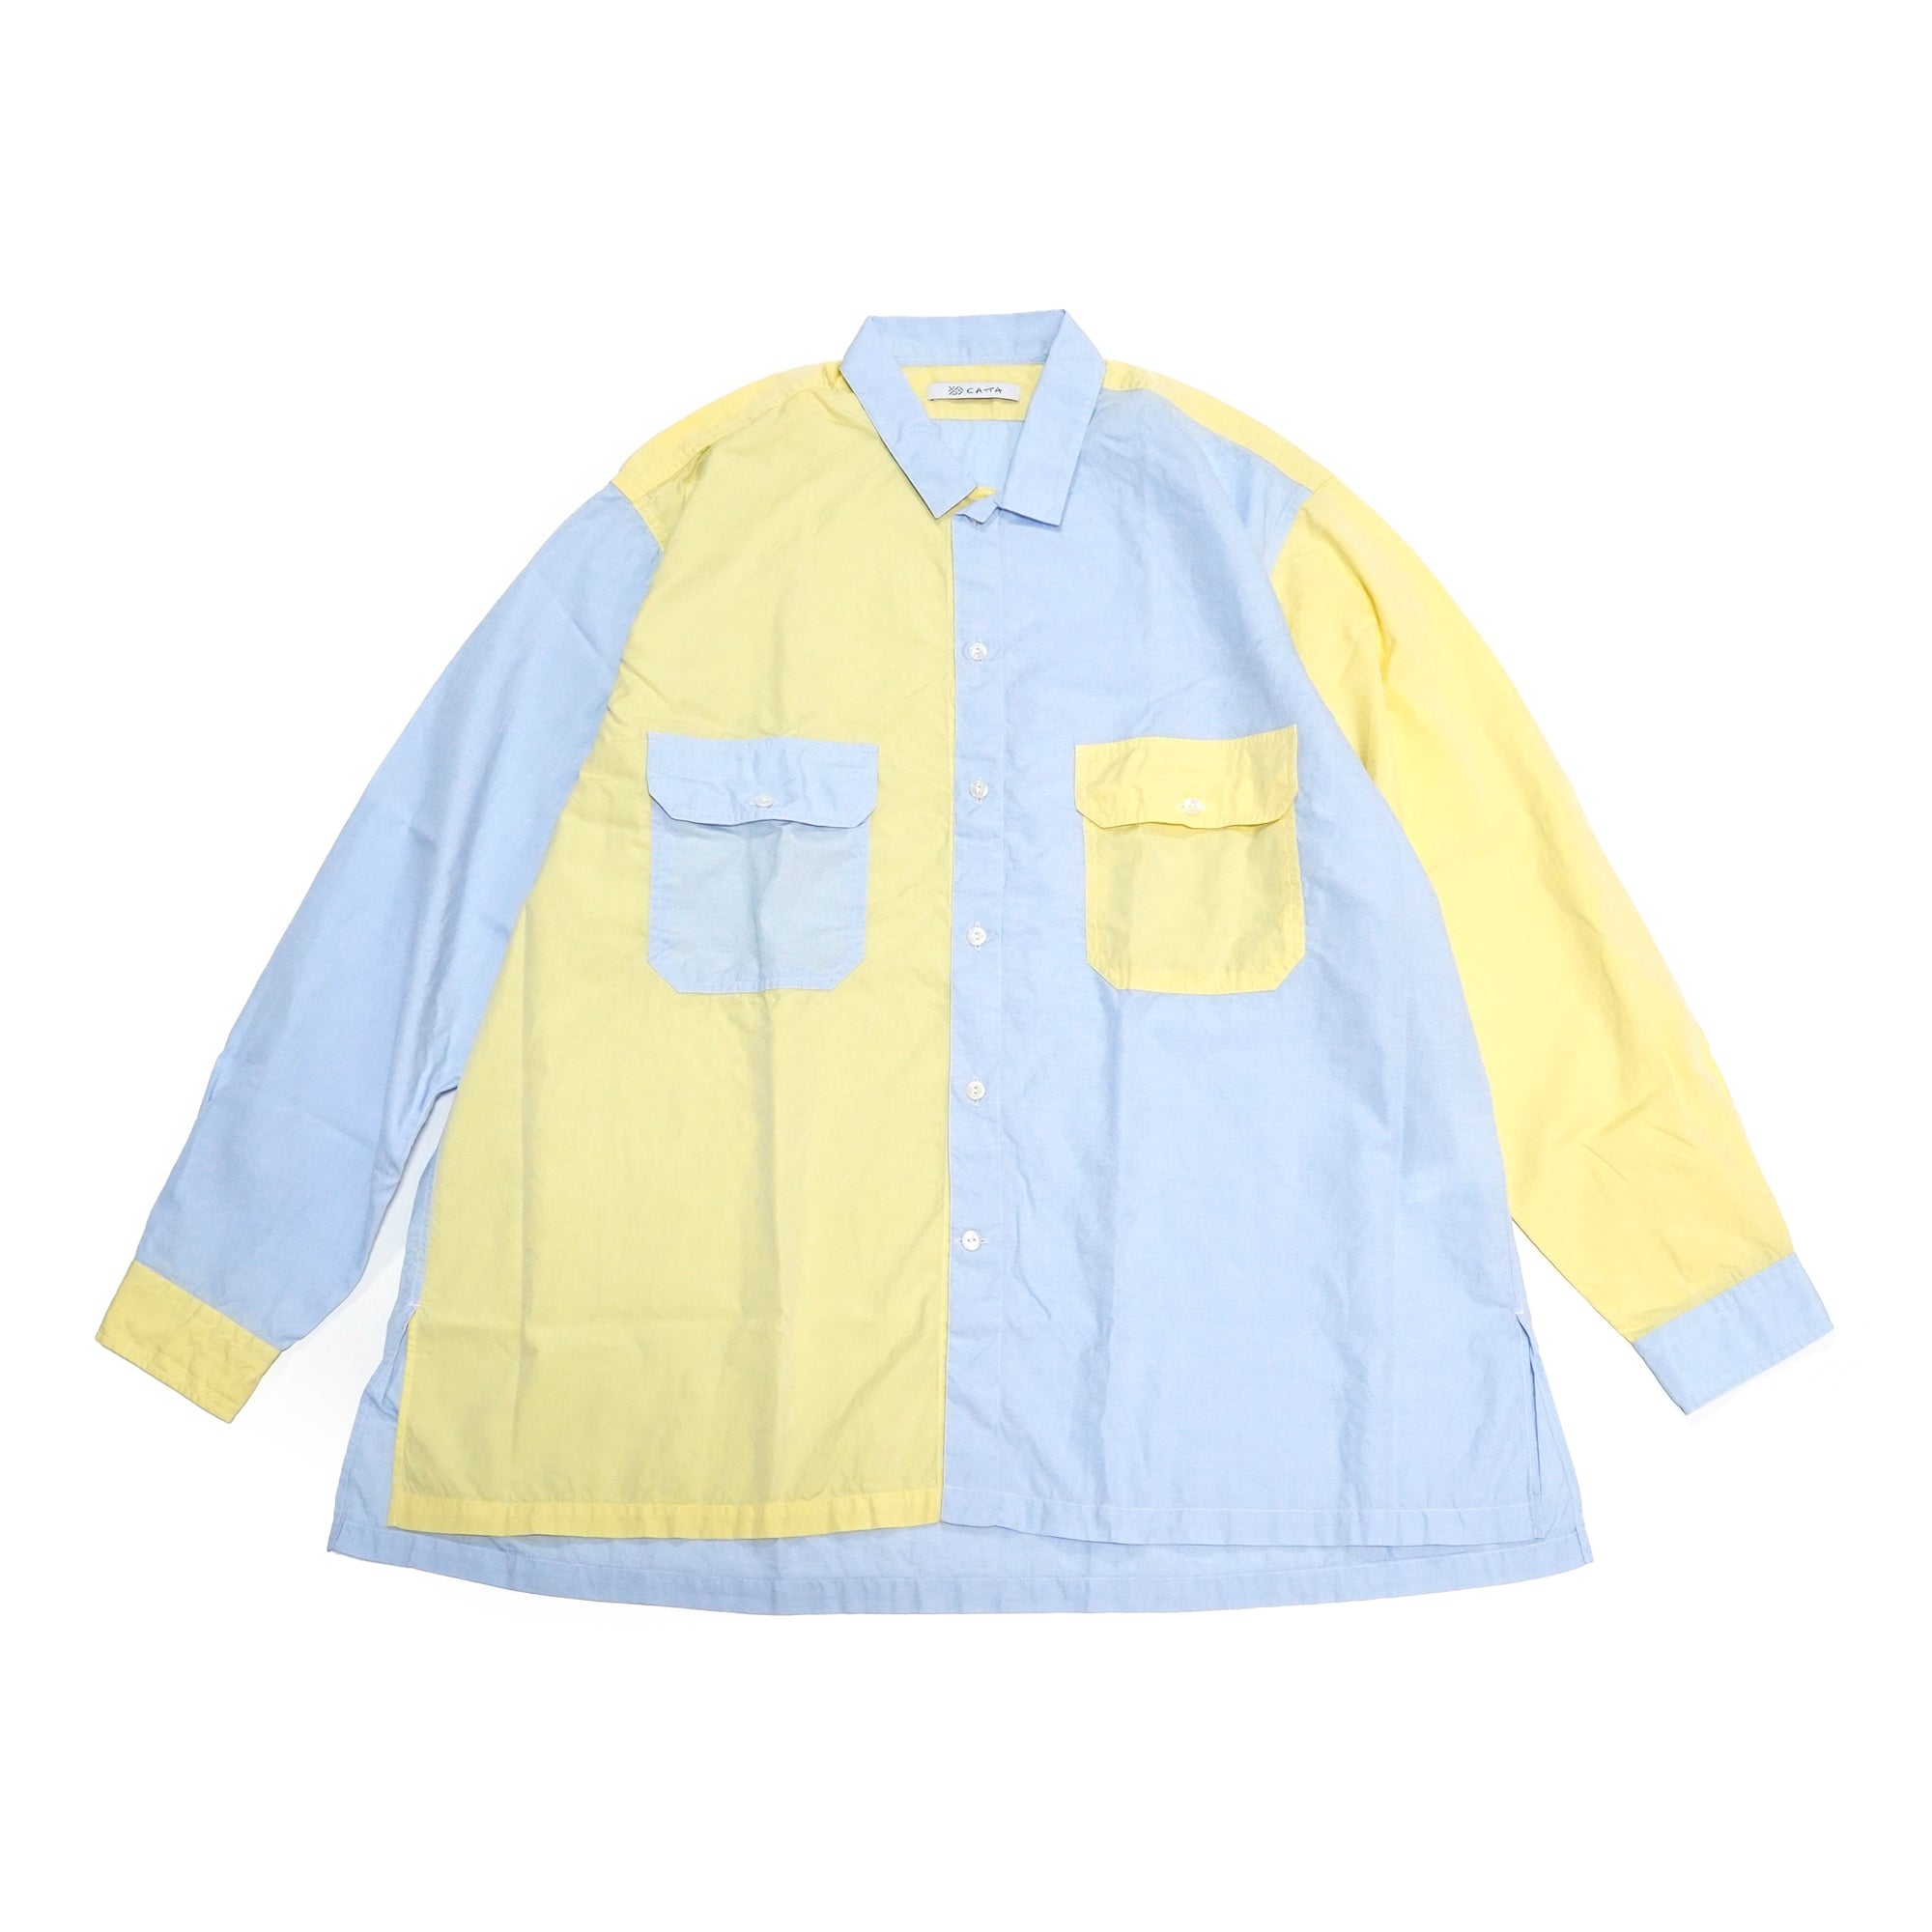 No:WPOCKETSH2021SSB | Name:W Pocket Shirts 100/2 | Color:Multi | Size-M/L【CATTA】-CATTA SHIRTS-ADDICTION FUKUOKA